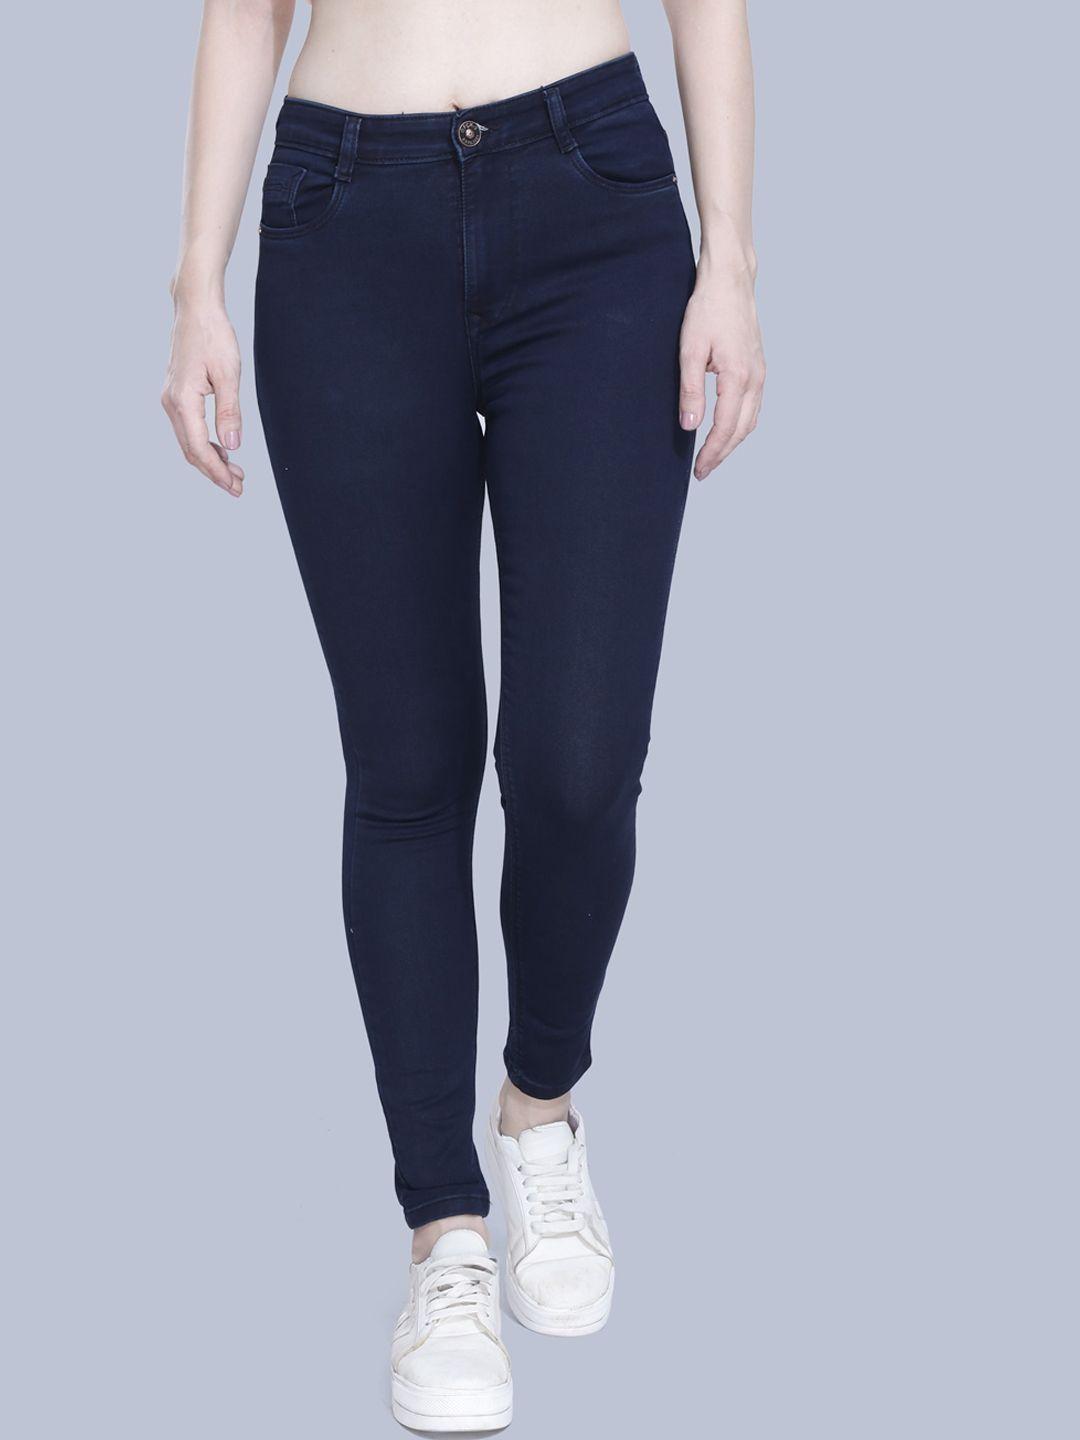 fck-3 women purple classic high-rise stretchable jeans